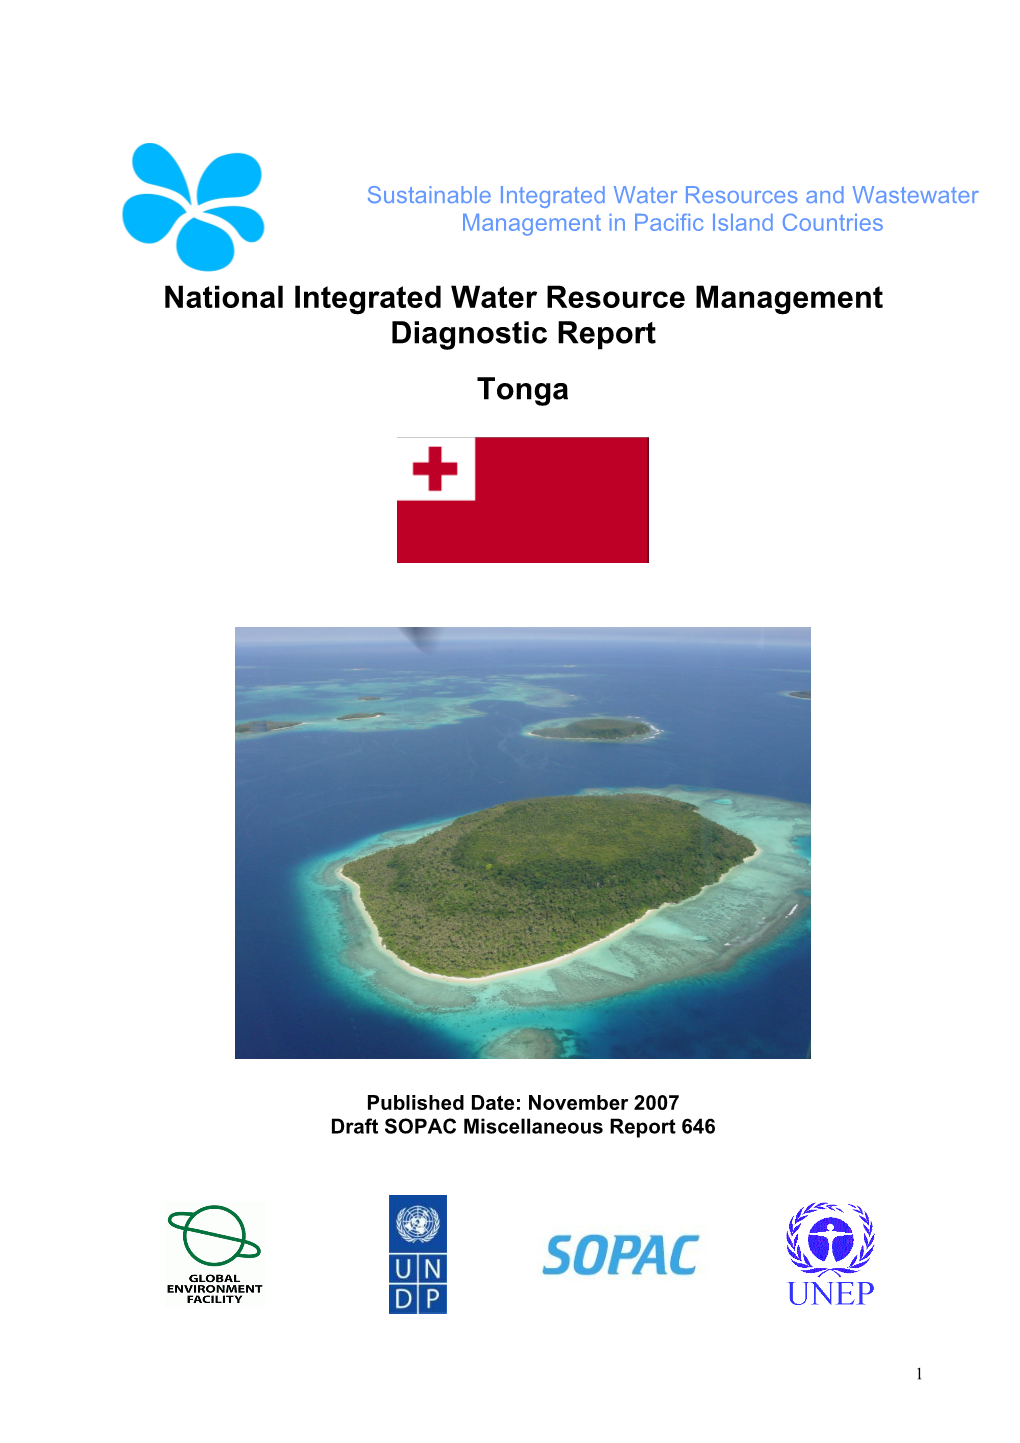 National Integrated Water Resource Management Diagnostic Report Tonga